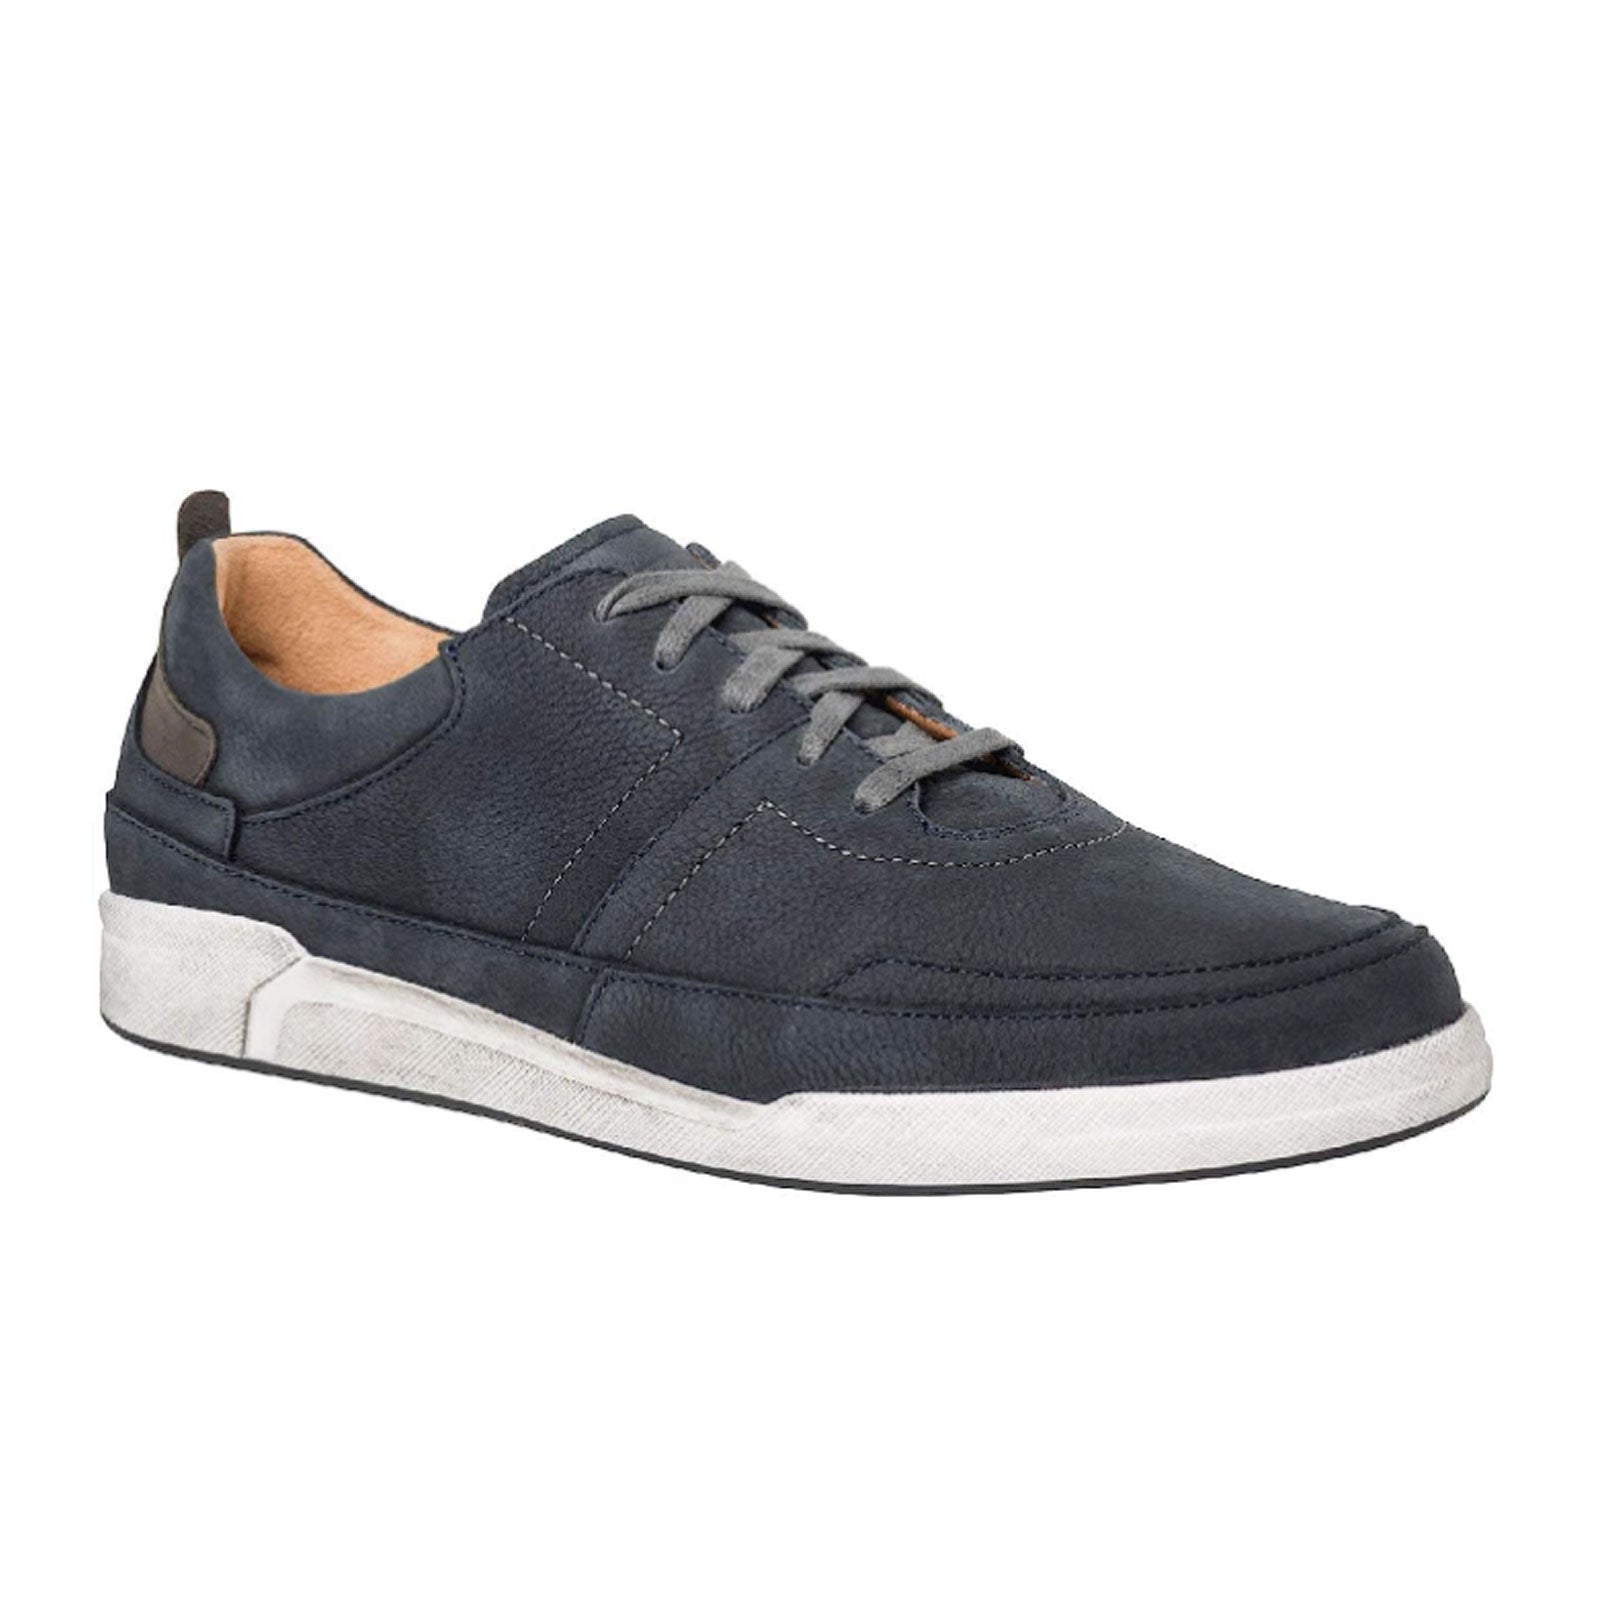 Buy Men Grey Casual Sneakers Online | SKU: 71-8671-14-40-Metro Shoes